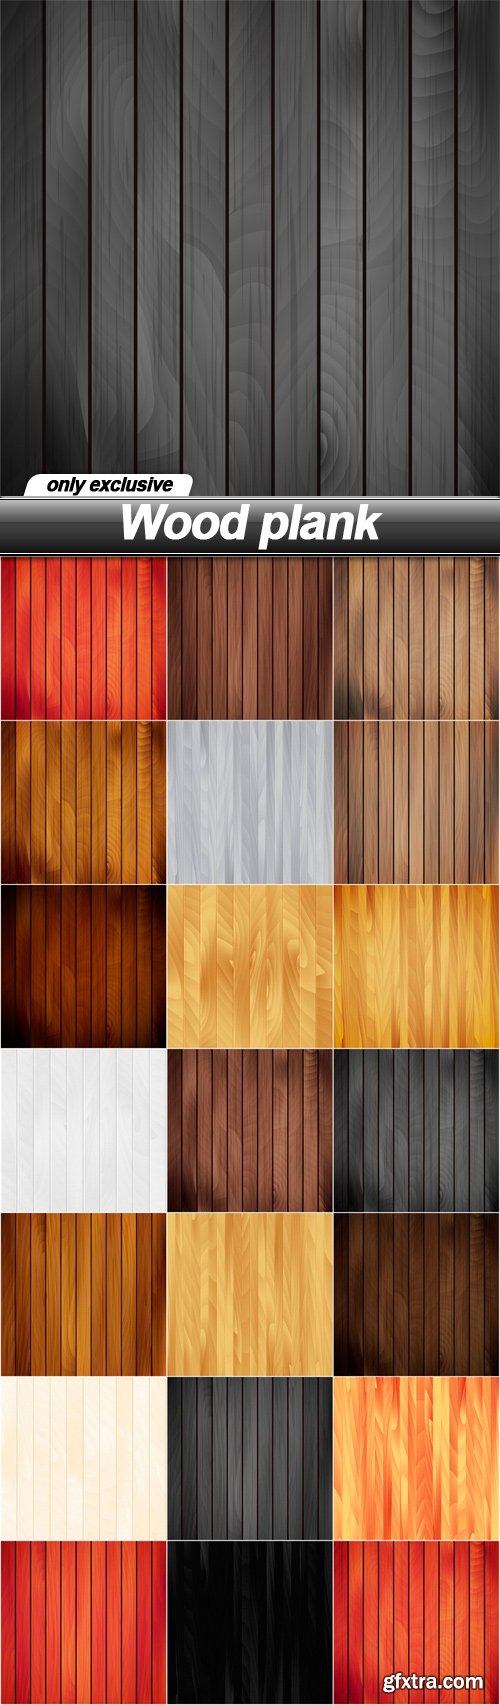 Wood plank - 20 EPS